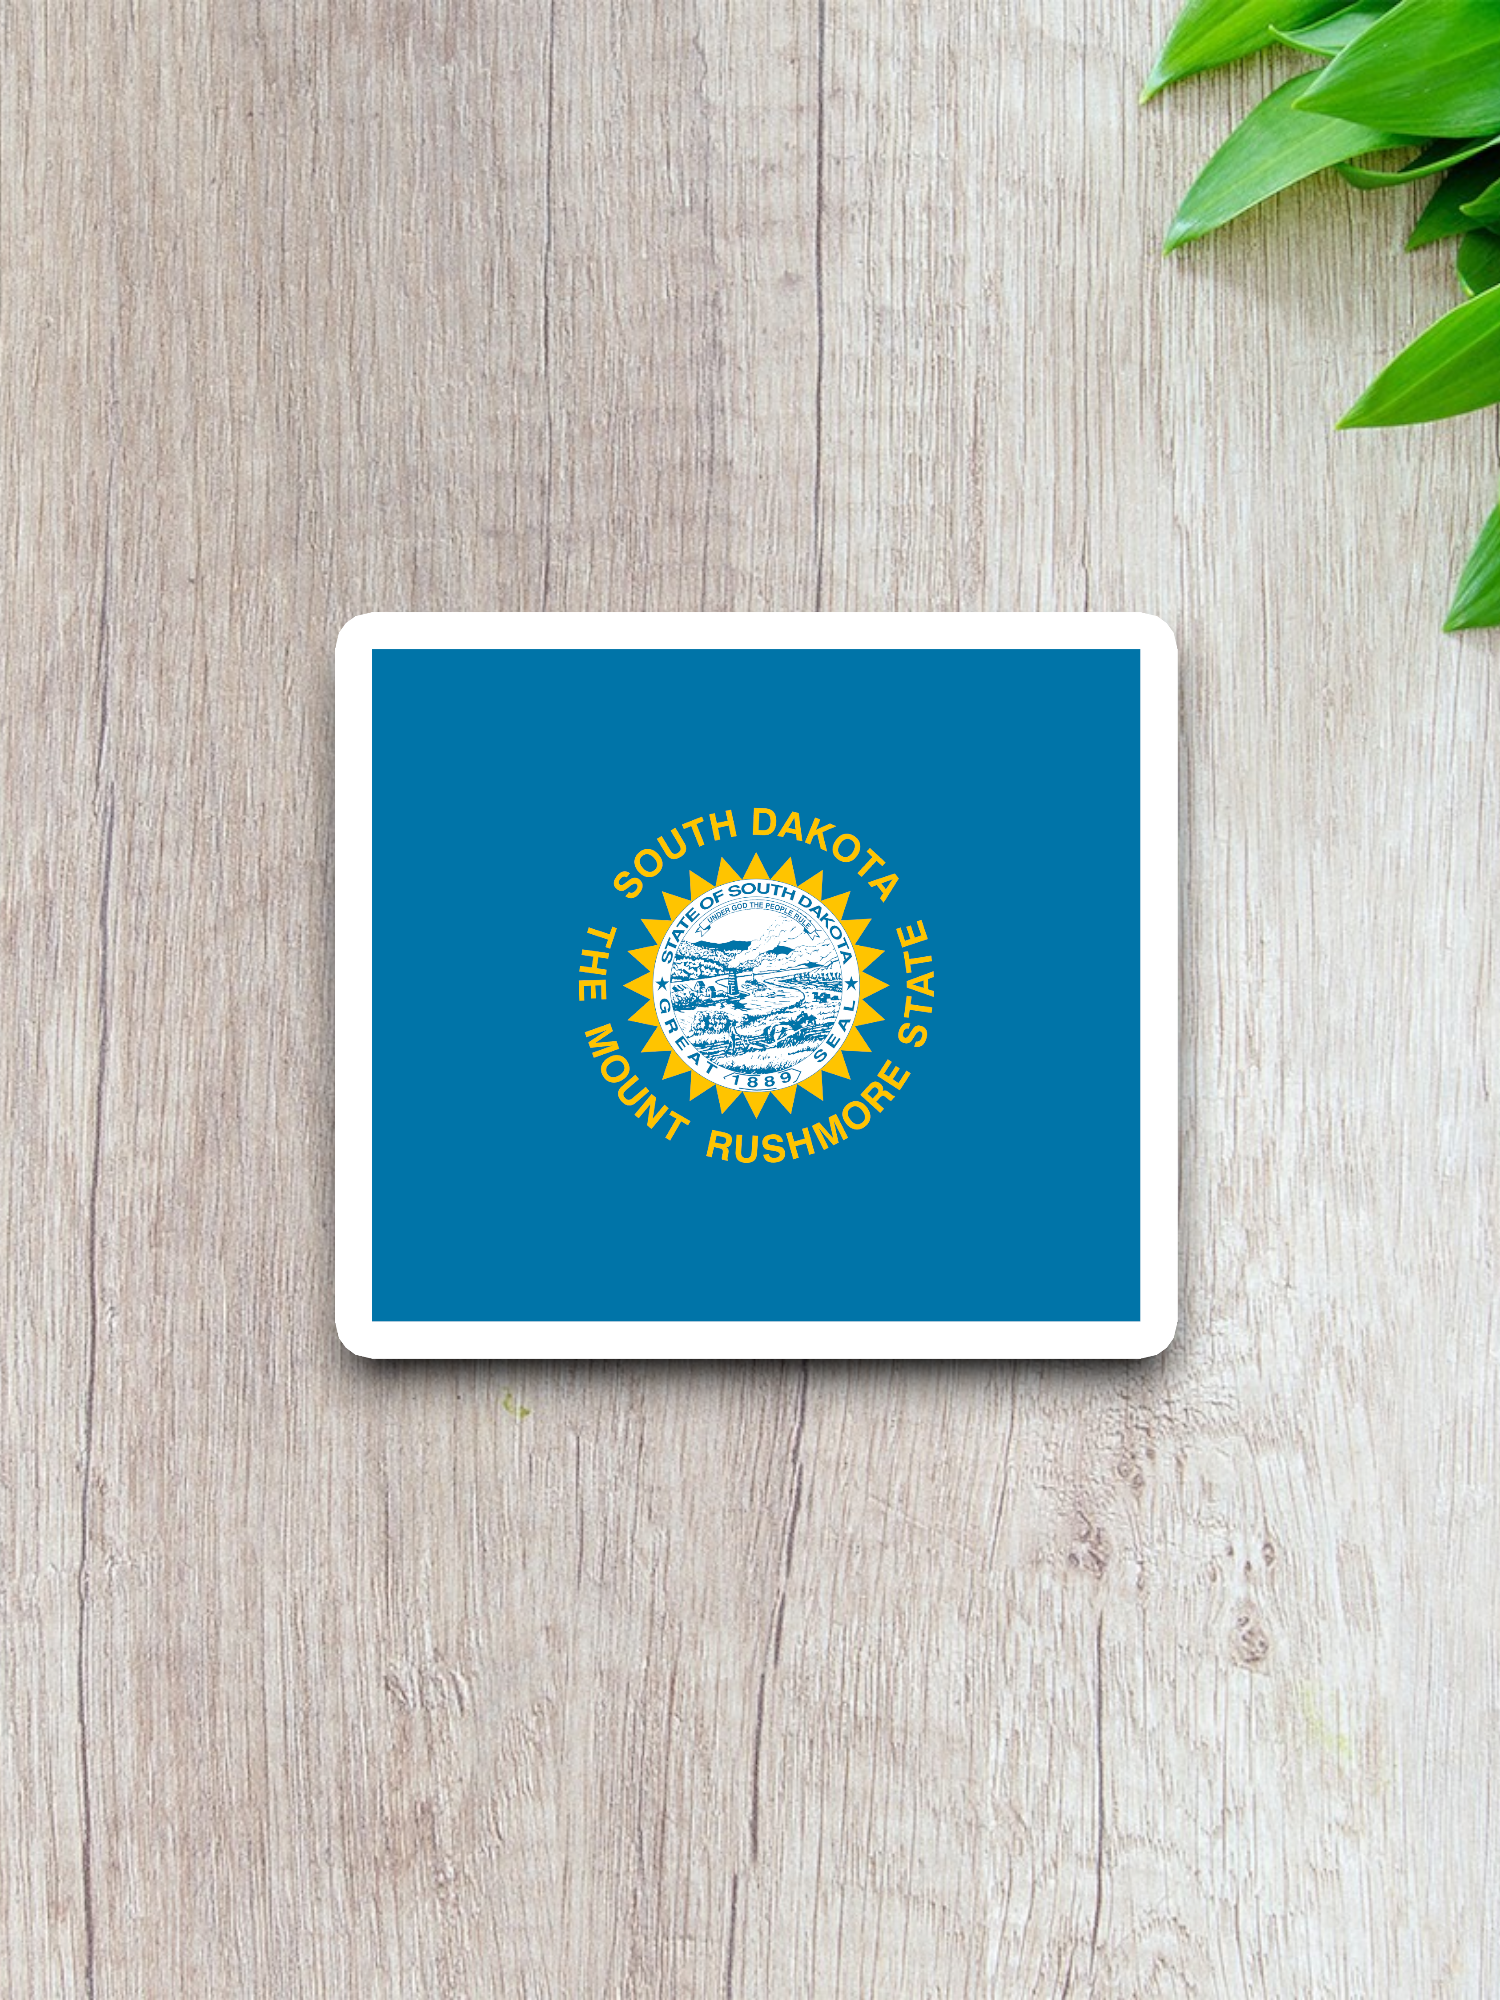 South Dakota Flag - State Flag Sticker